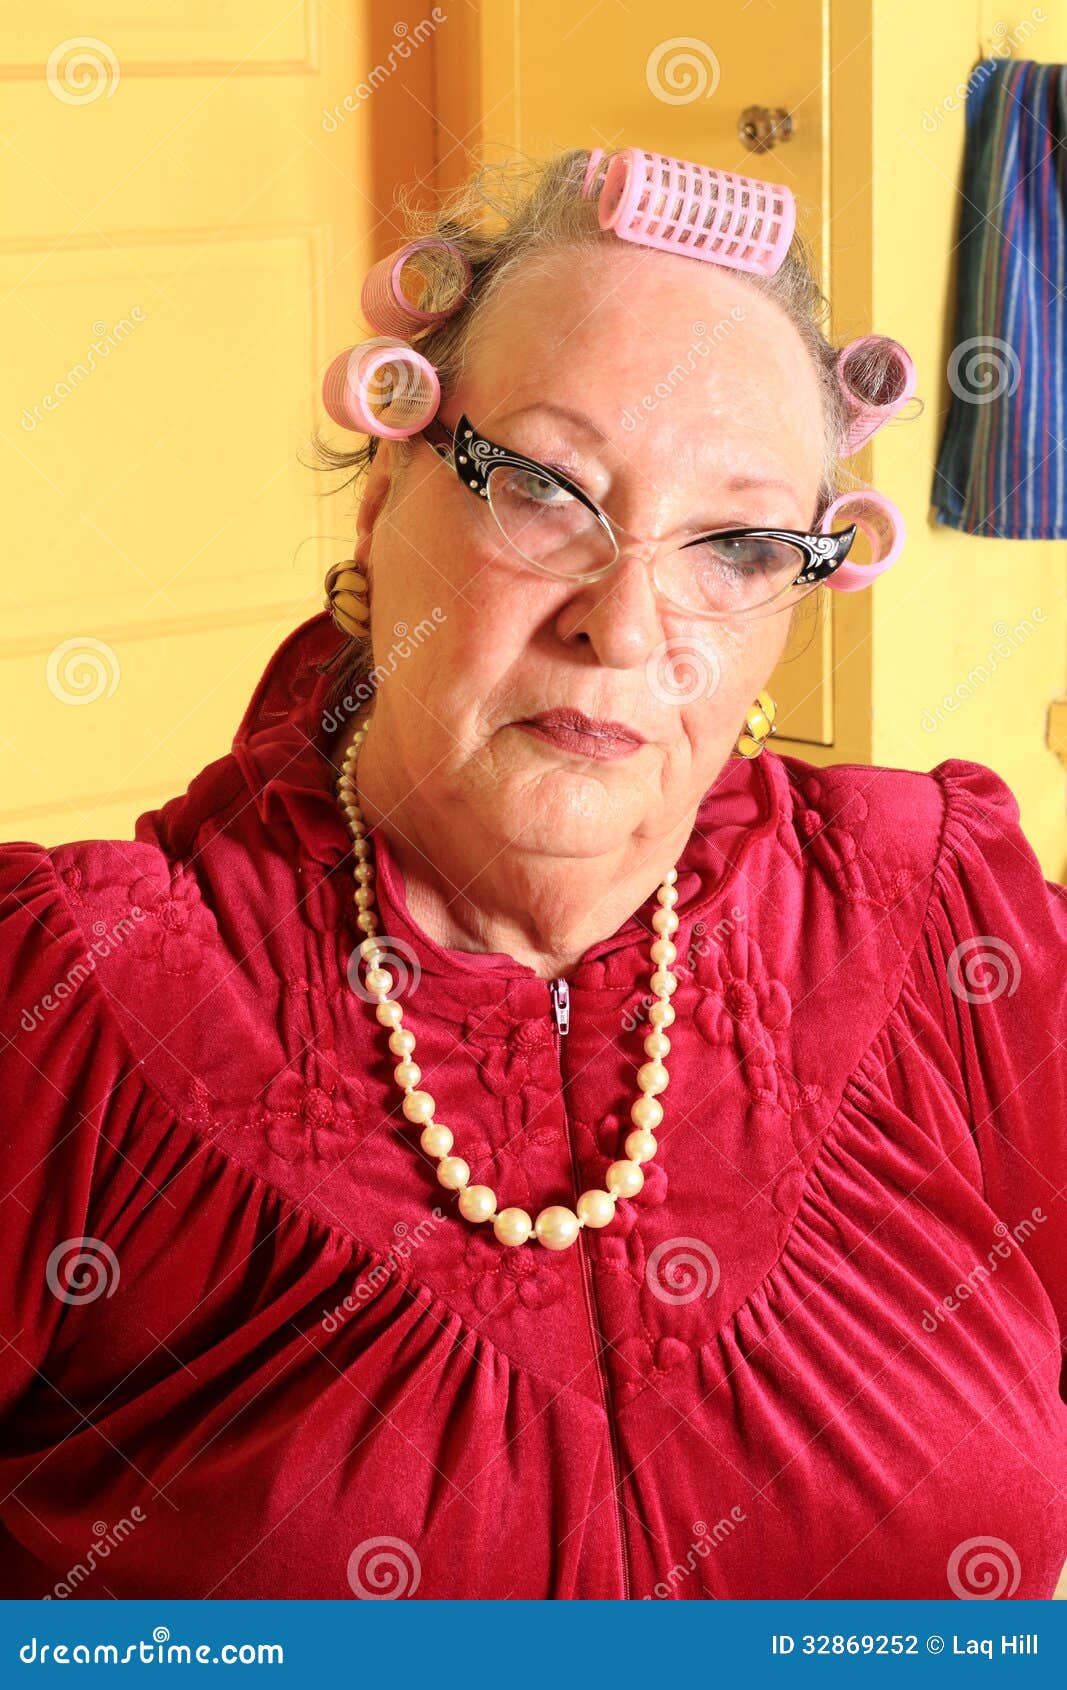 grumpy senior granny with curlers